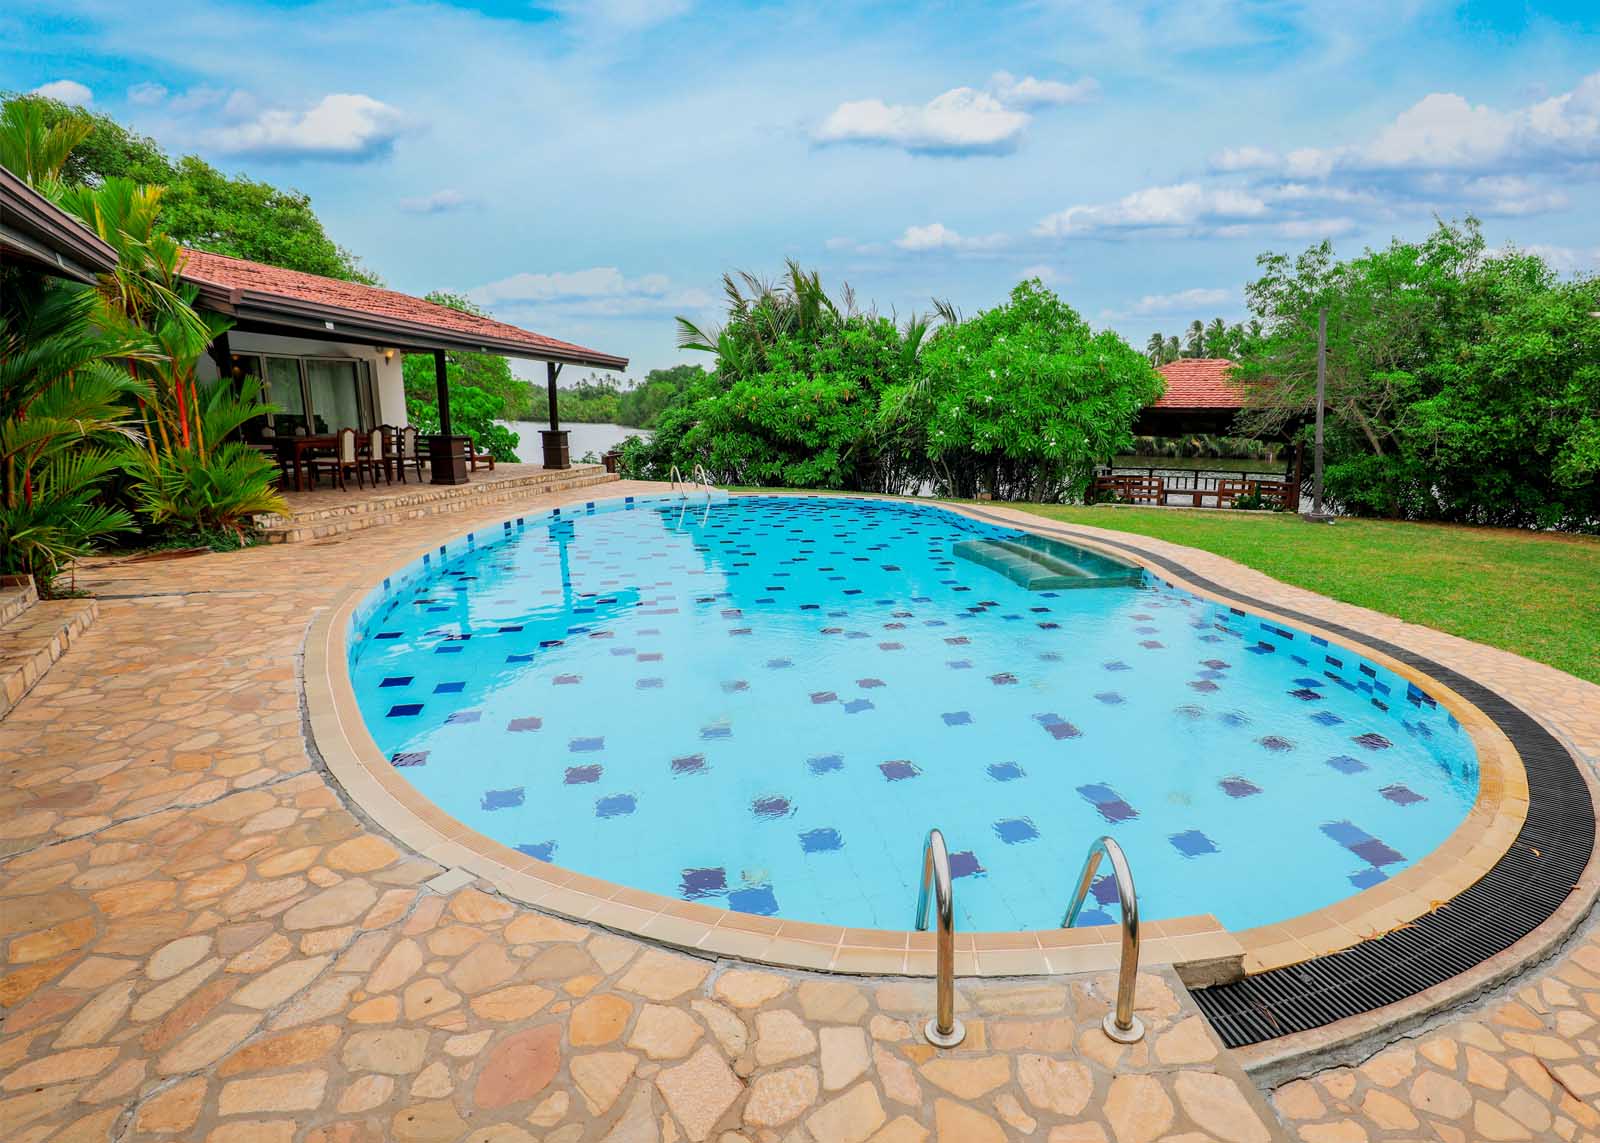 Kumudu Valley Resort - Best Hotels in Sri Lanka, Luxuary Cheap Negombo